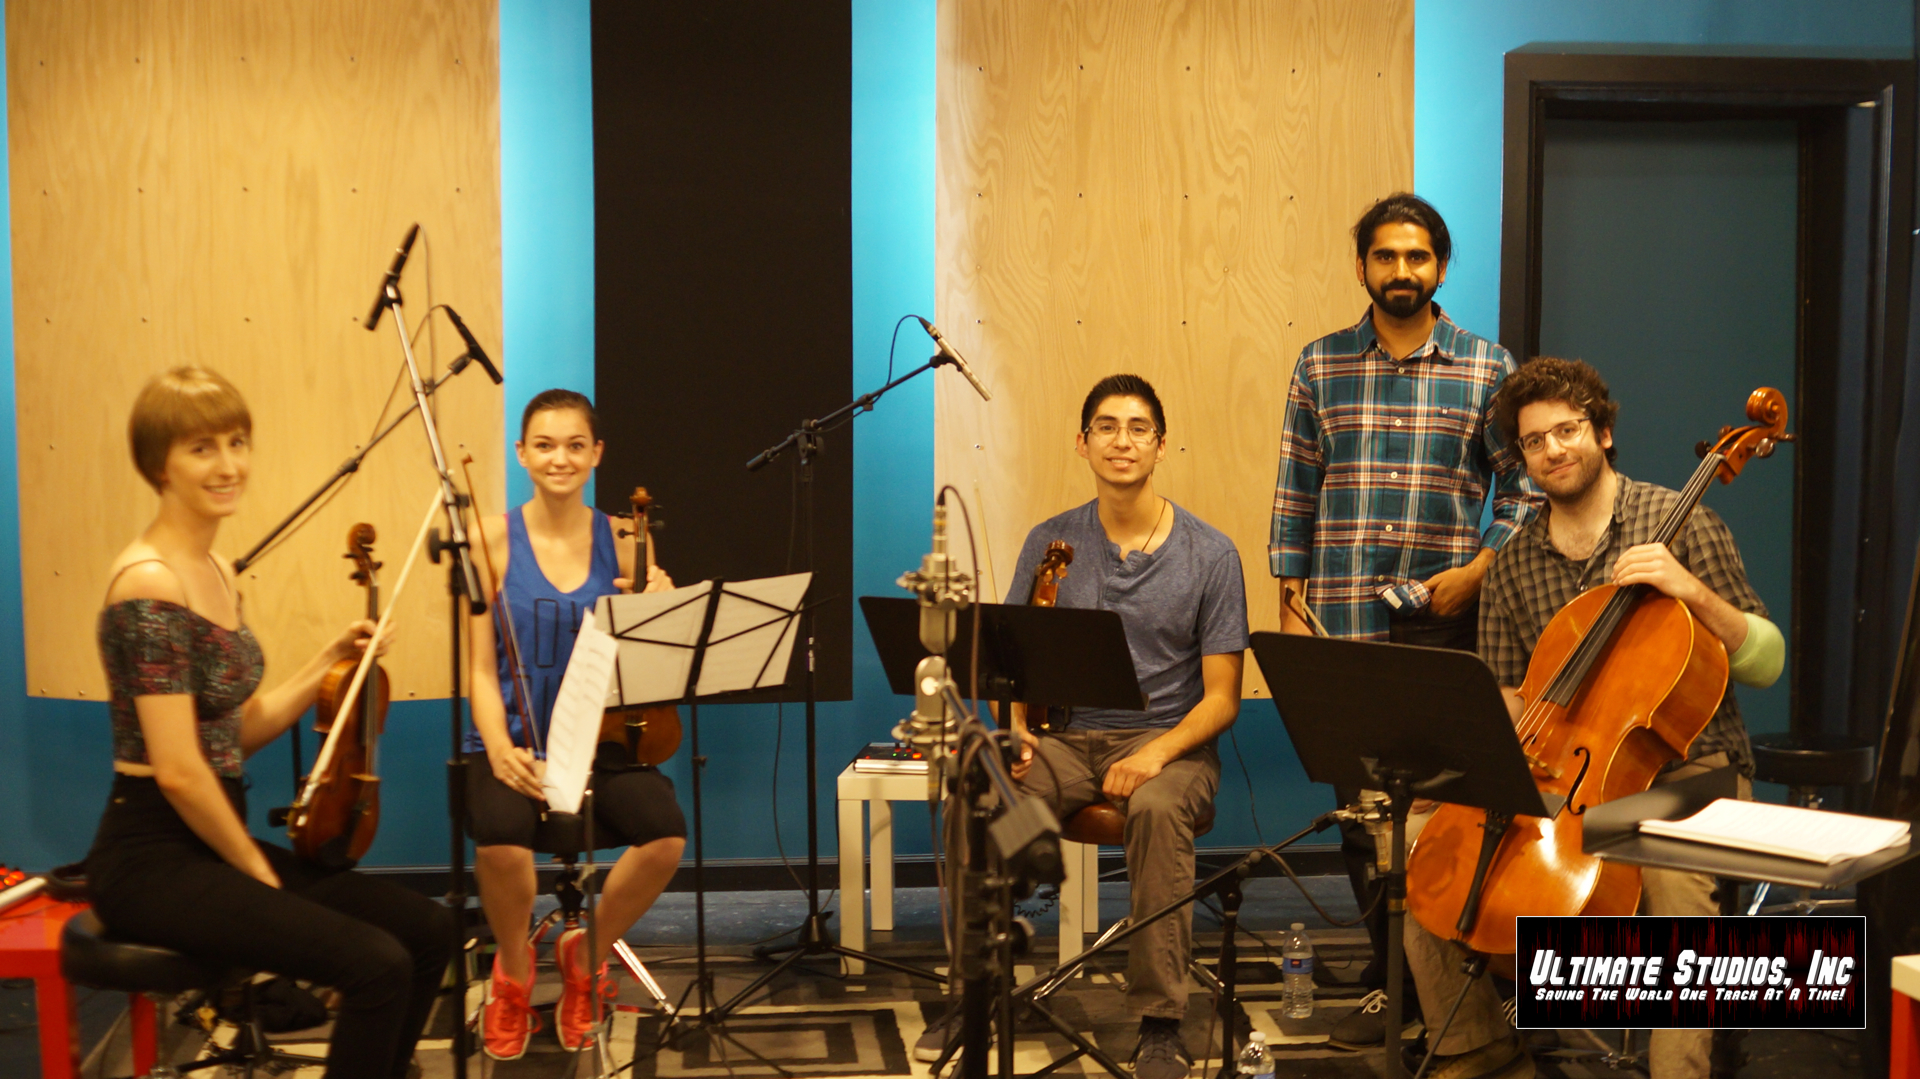 Sandesh Nagaraj and the string quartet featuring Mary Keating & Jordan Slocum on Violin, Brandon Encinas on Viola and Billy Tobenkin on Cello at Ultimate Studios, Inc